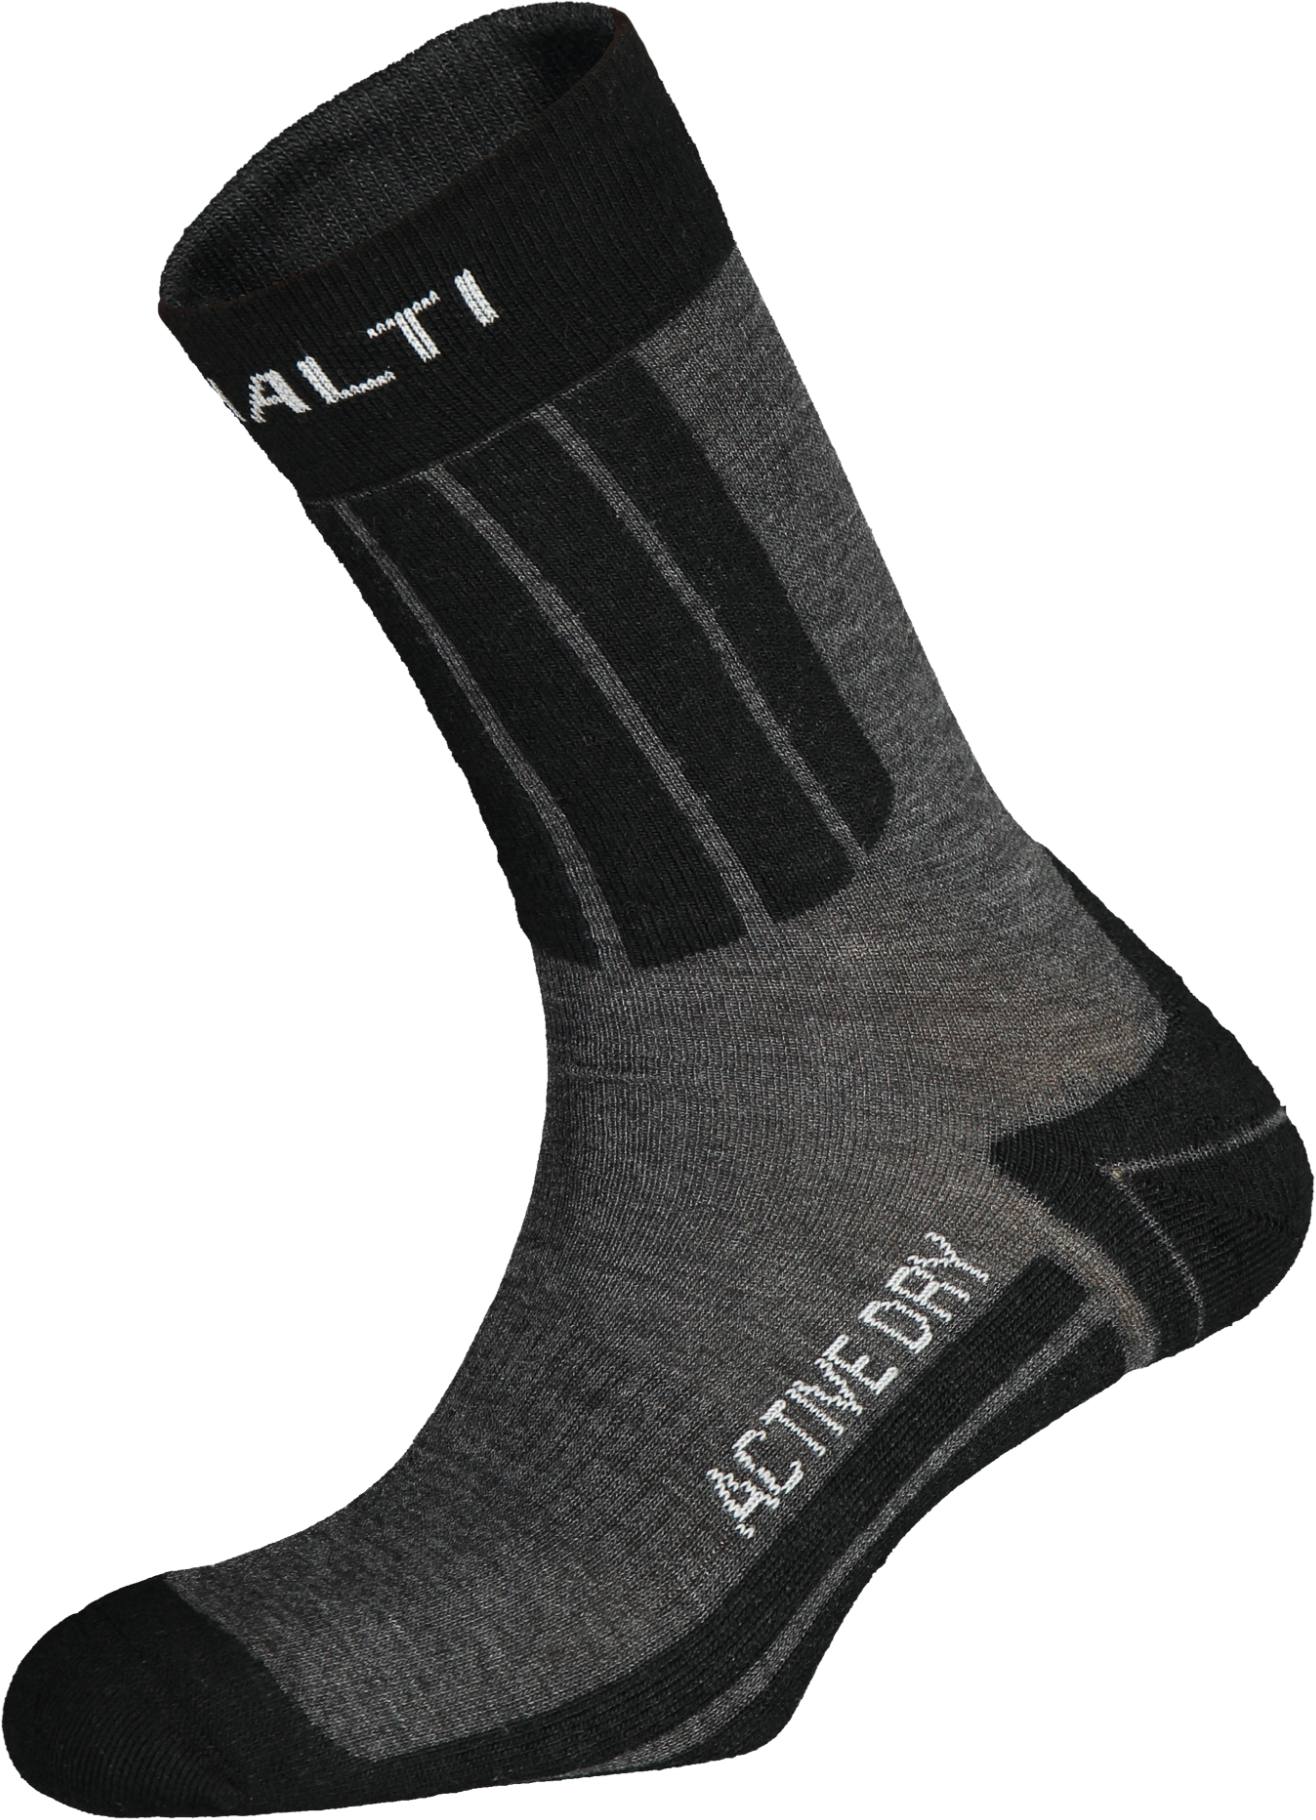 Image of Halti XC Socks